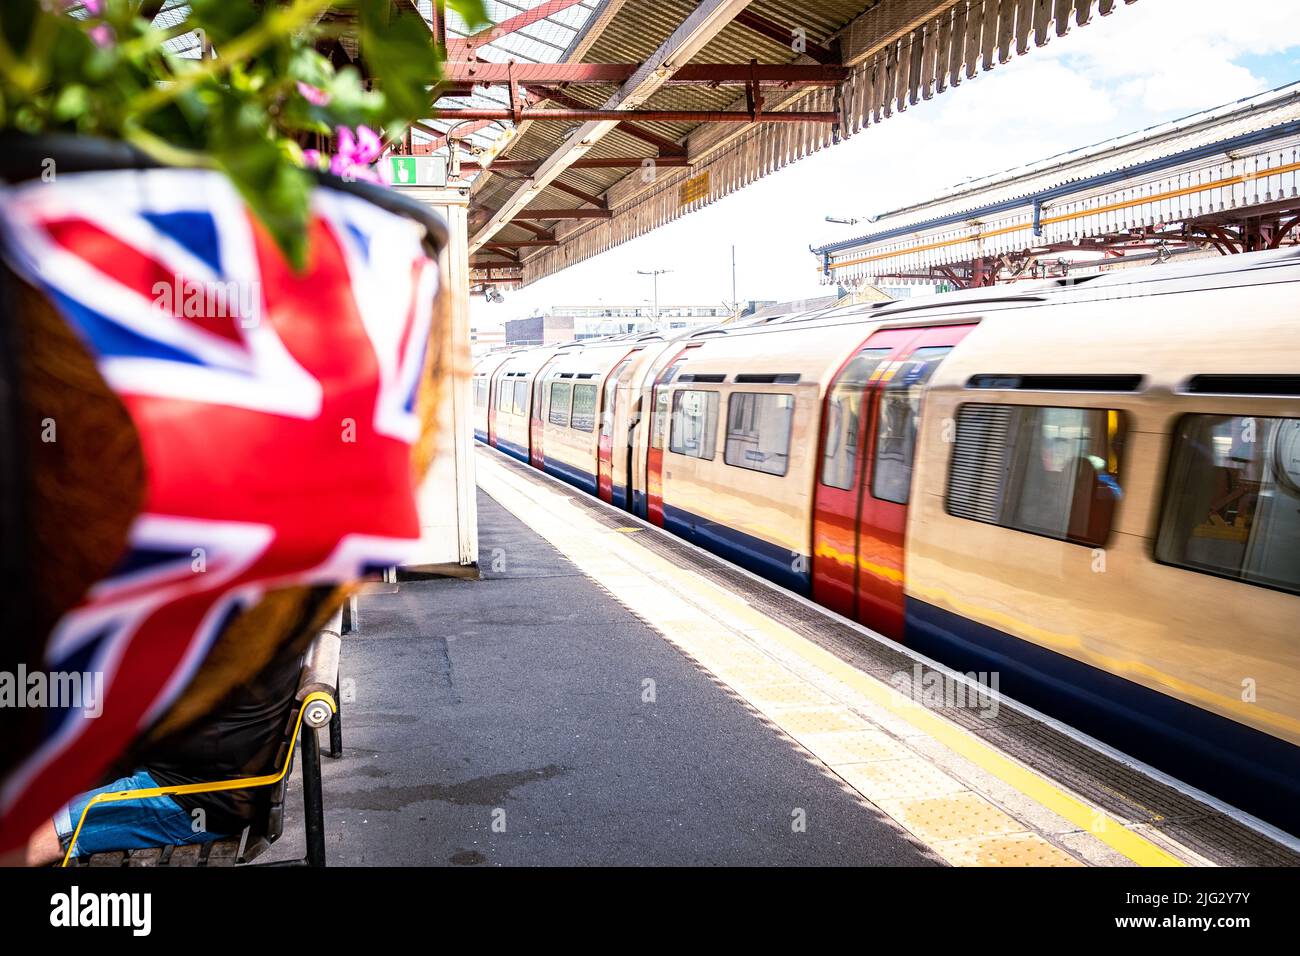 British Union flag and London Underground train Stock Photo